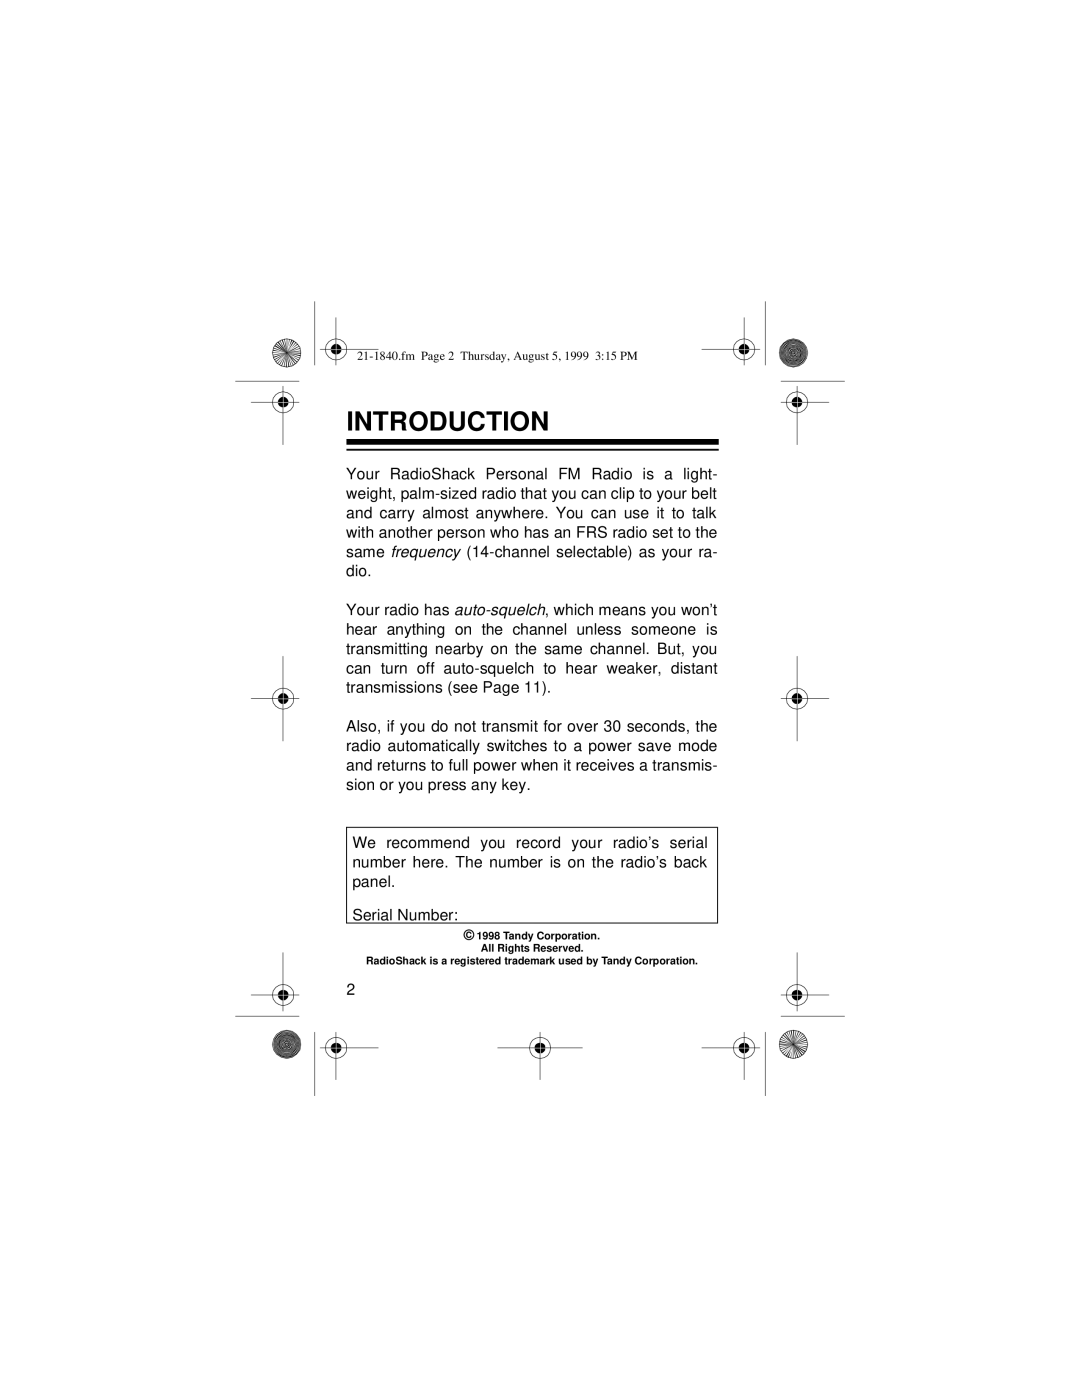 Radio Shack 21-1840 owner manual Introduction 